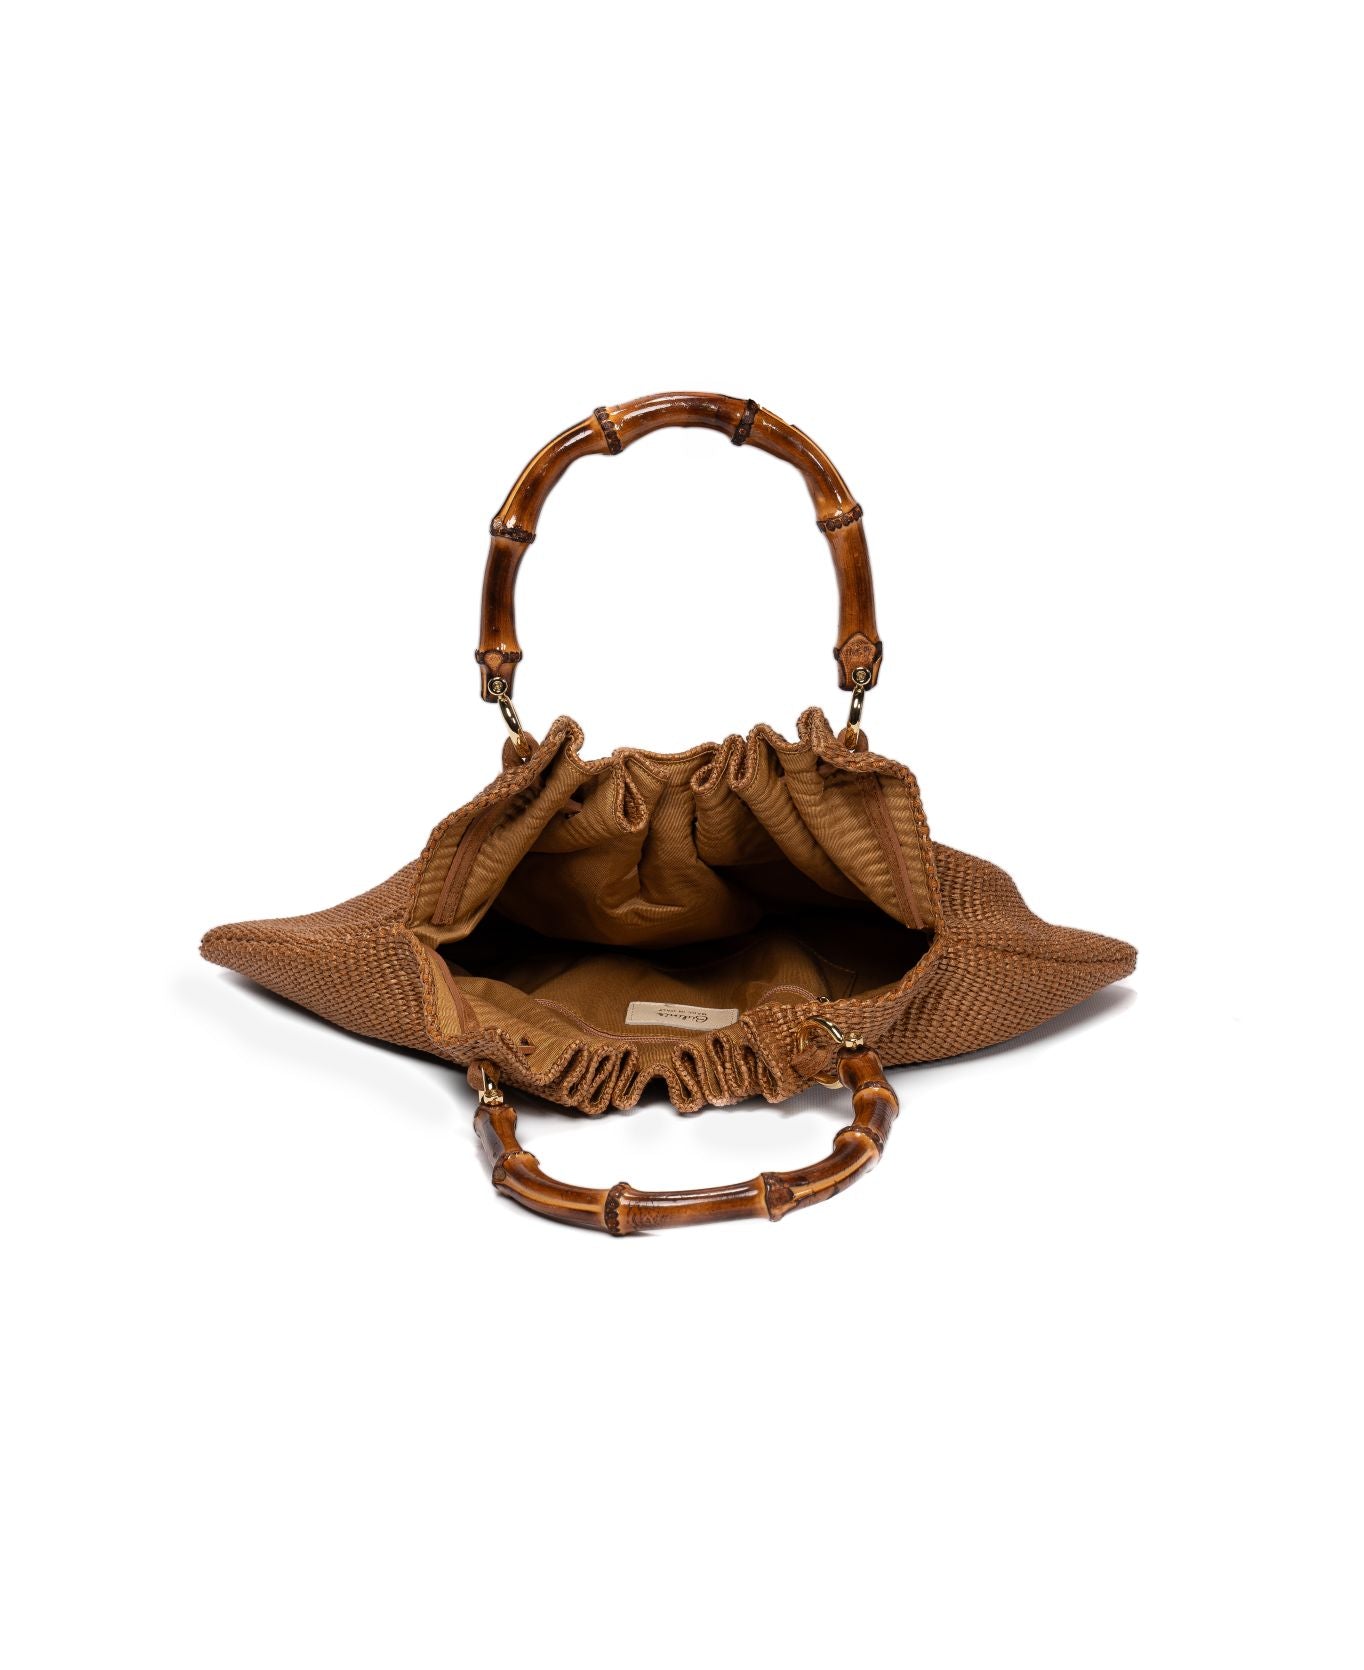 raffia handbags, bamboo handle bags, tobacco brown bags, Italian crafted handbags, versatile slouchy bags